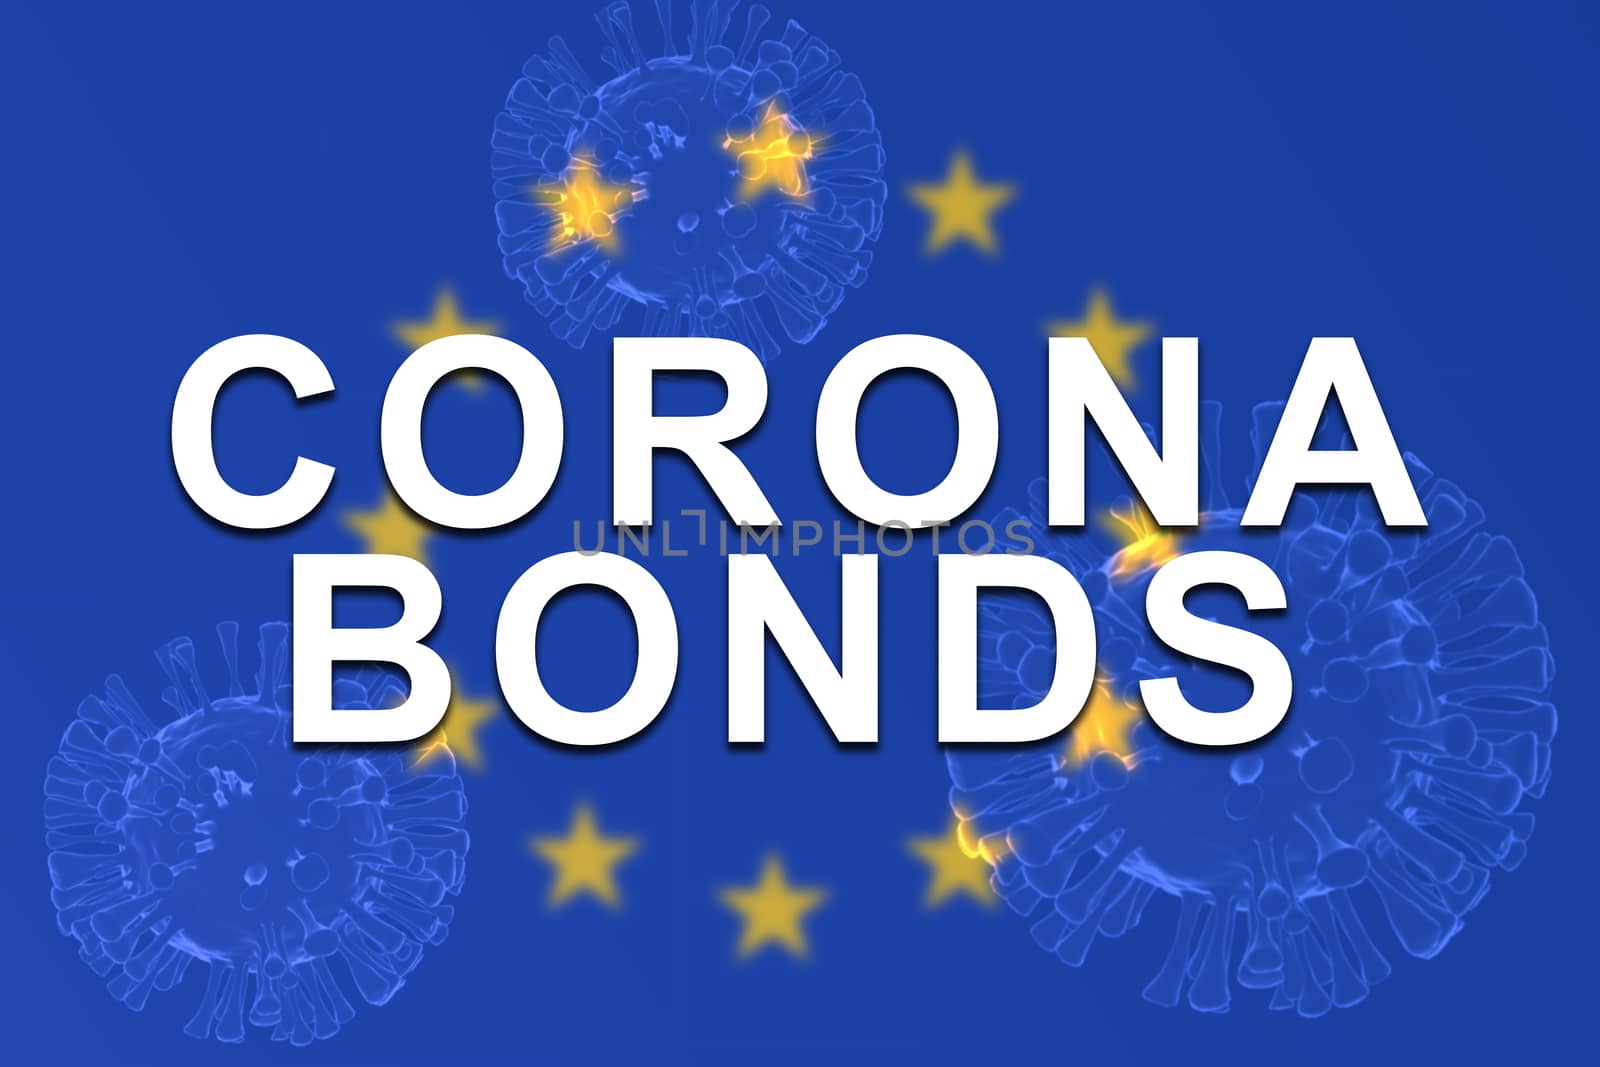 Corona Bonds on EU or European Union flag with 3d rendered illustration of virus as background. by lakshmiprasad.maski@gmai.com